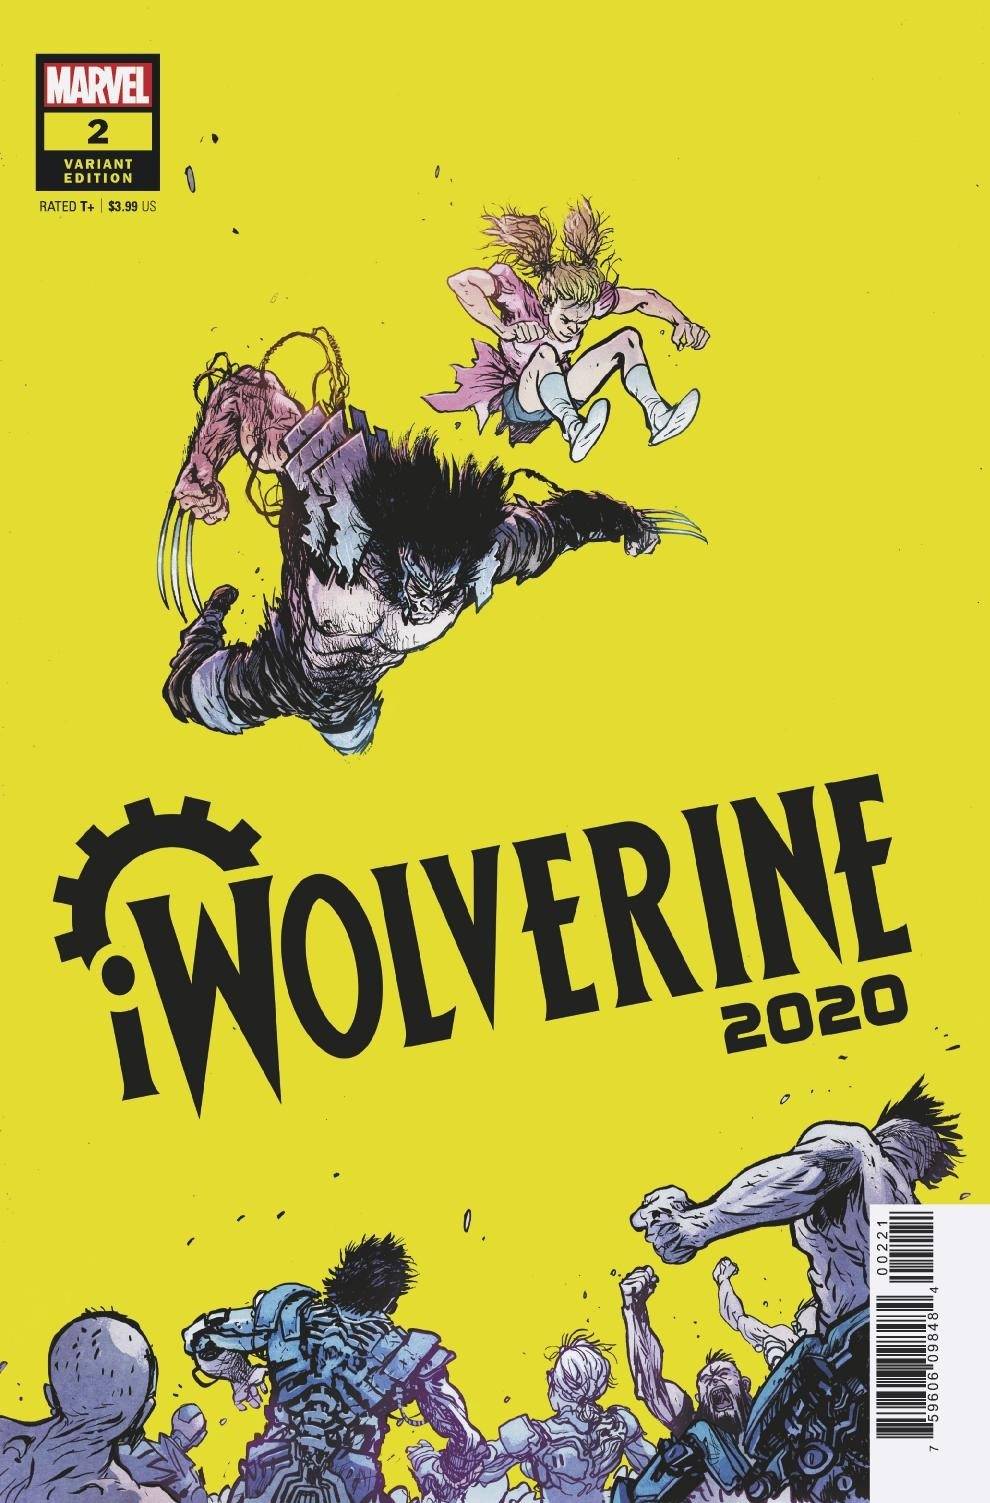 2020 Iwolverine #2 Johnson Variant (Of 2)